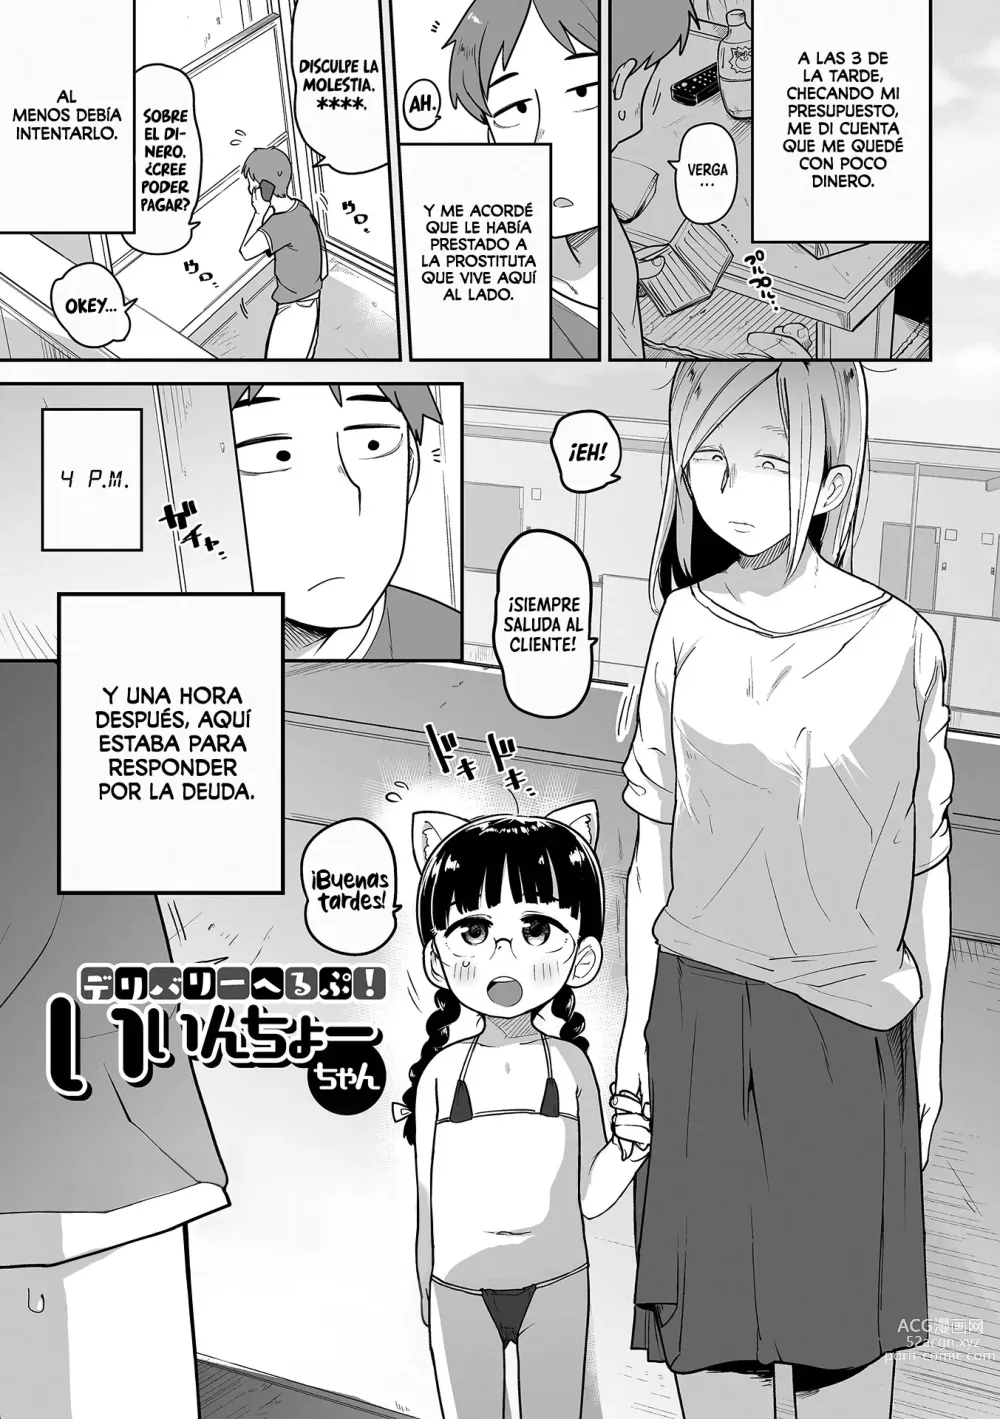 Page 1 of manga Servicio de Pagos Inko